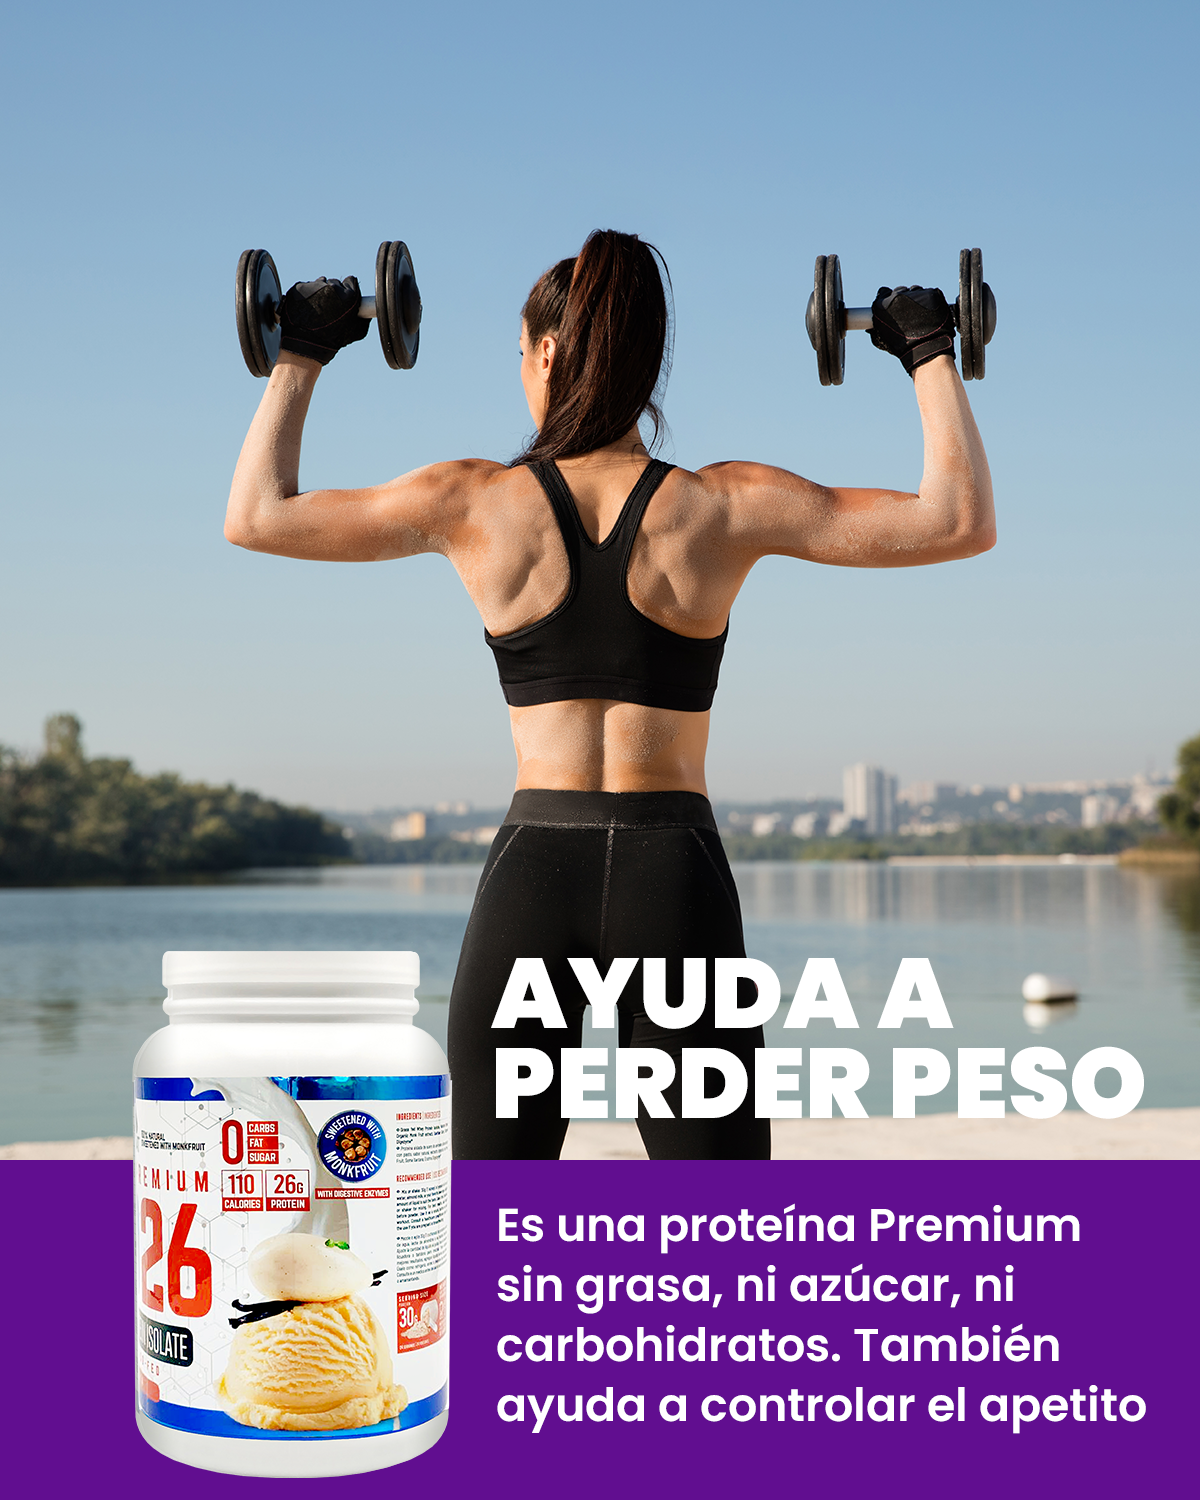 PROTEINA ISO26 (Premium Whey Protein Isolate) - Sabor Vainilla